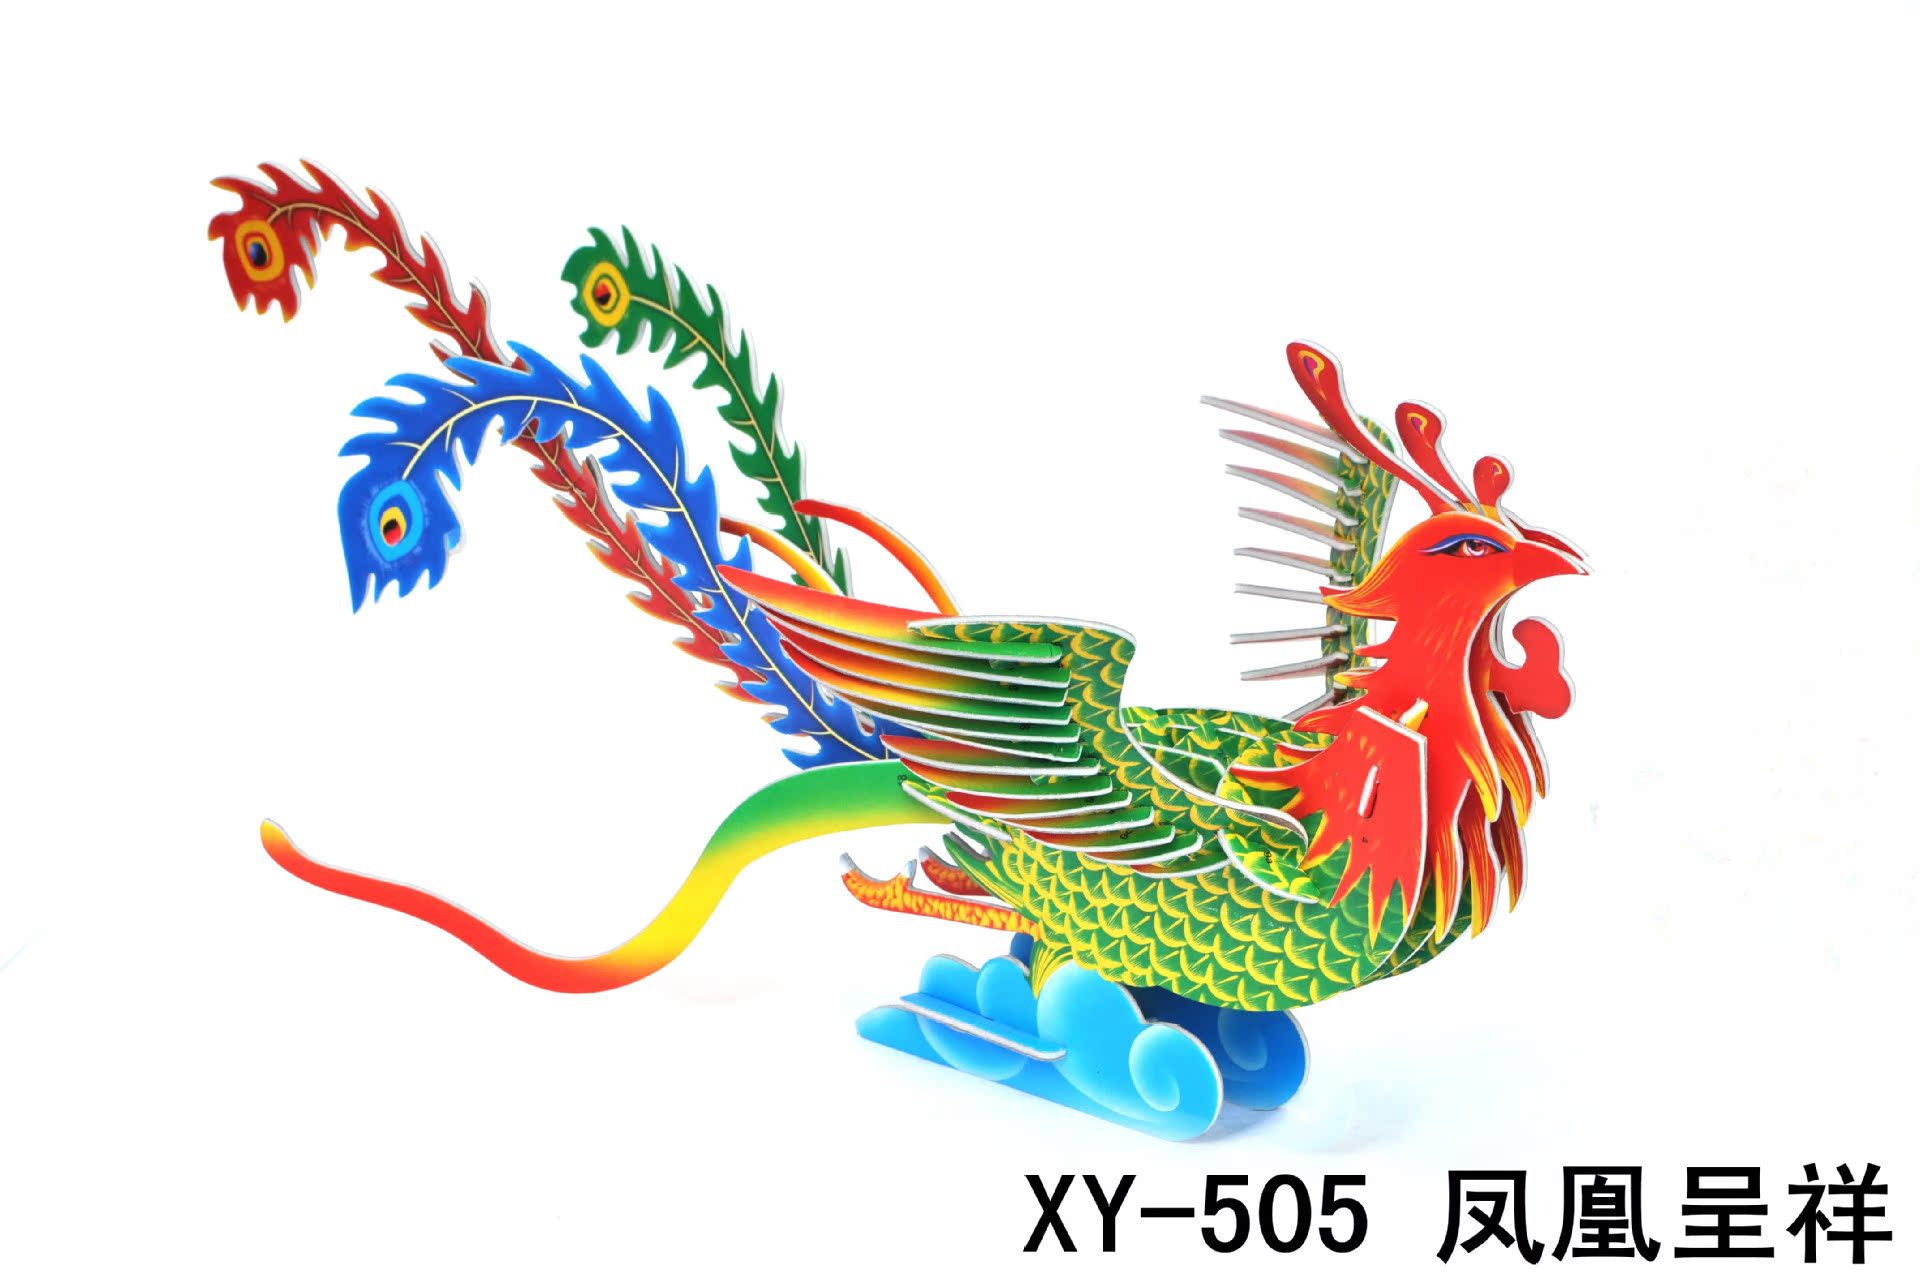 XY-505 Phoenix_副本_副本